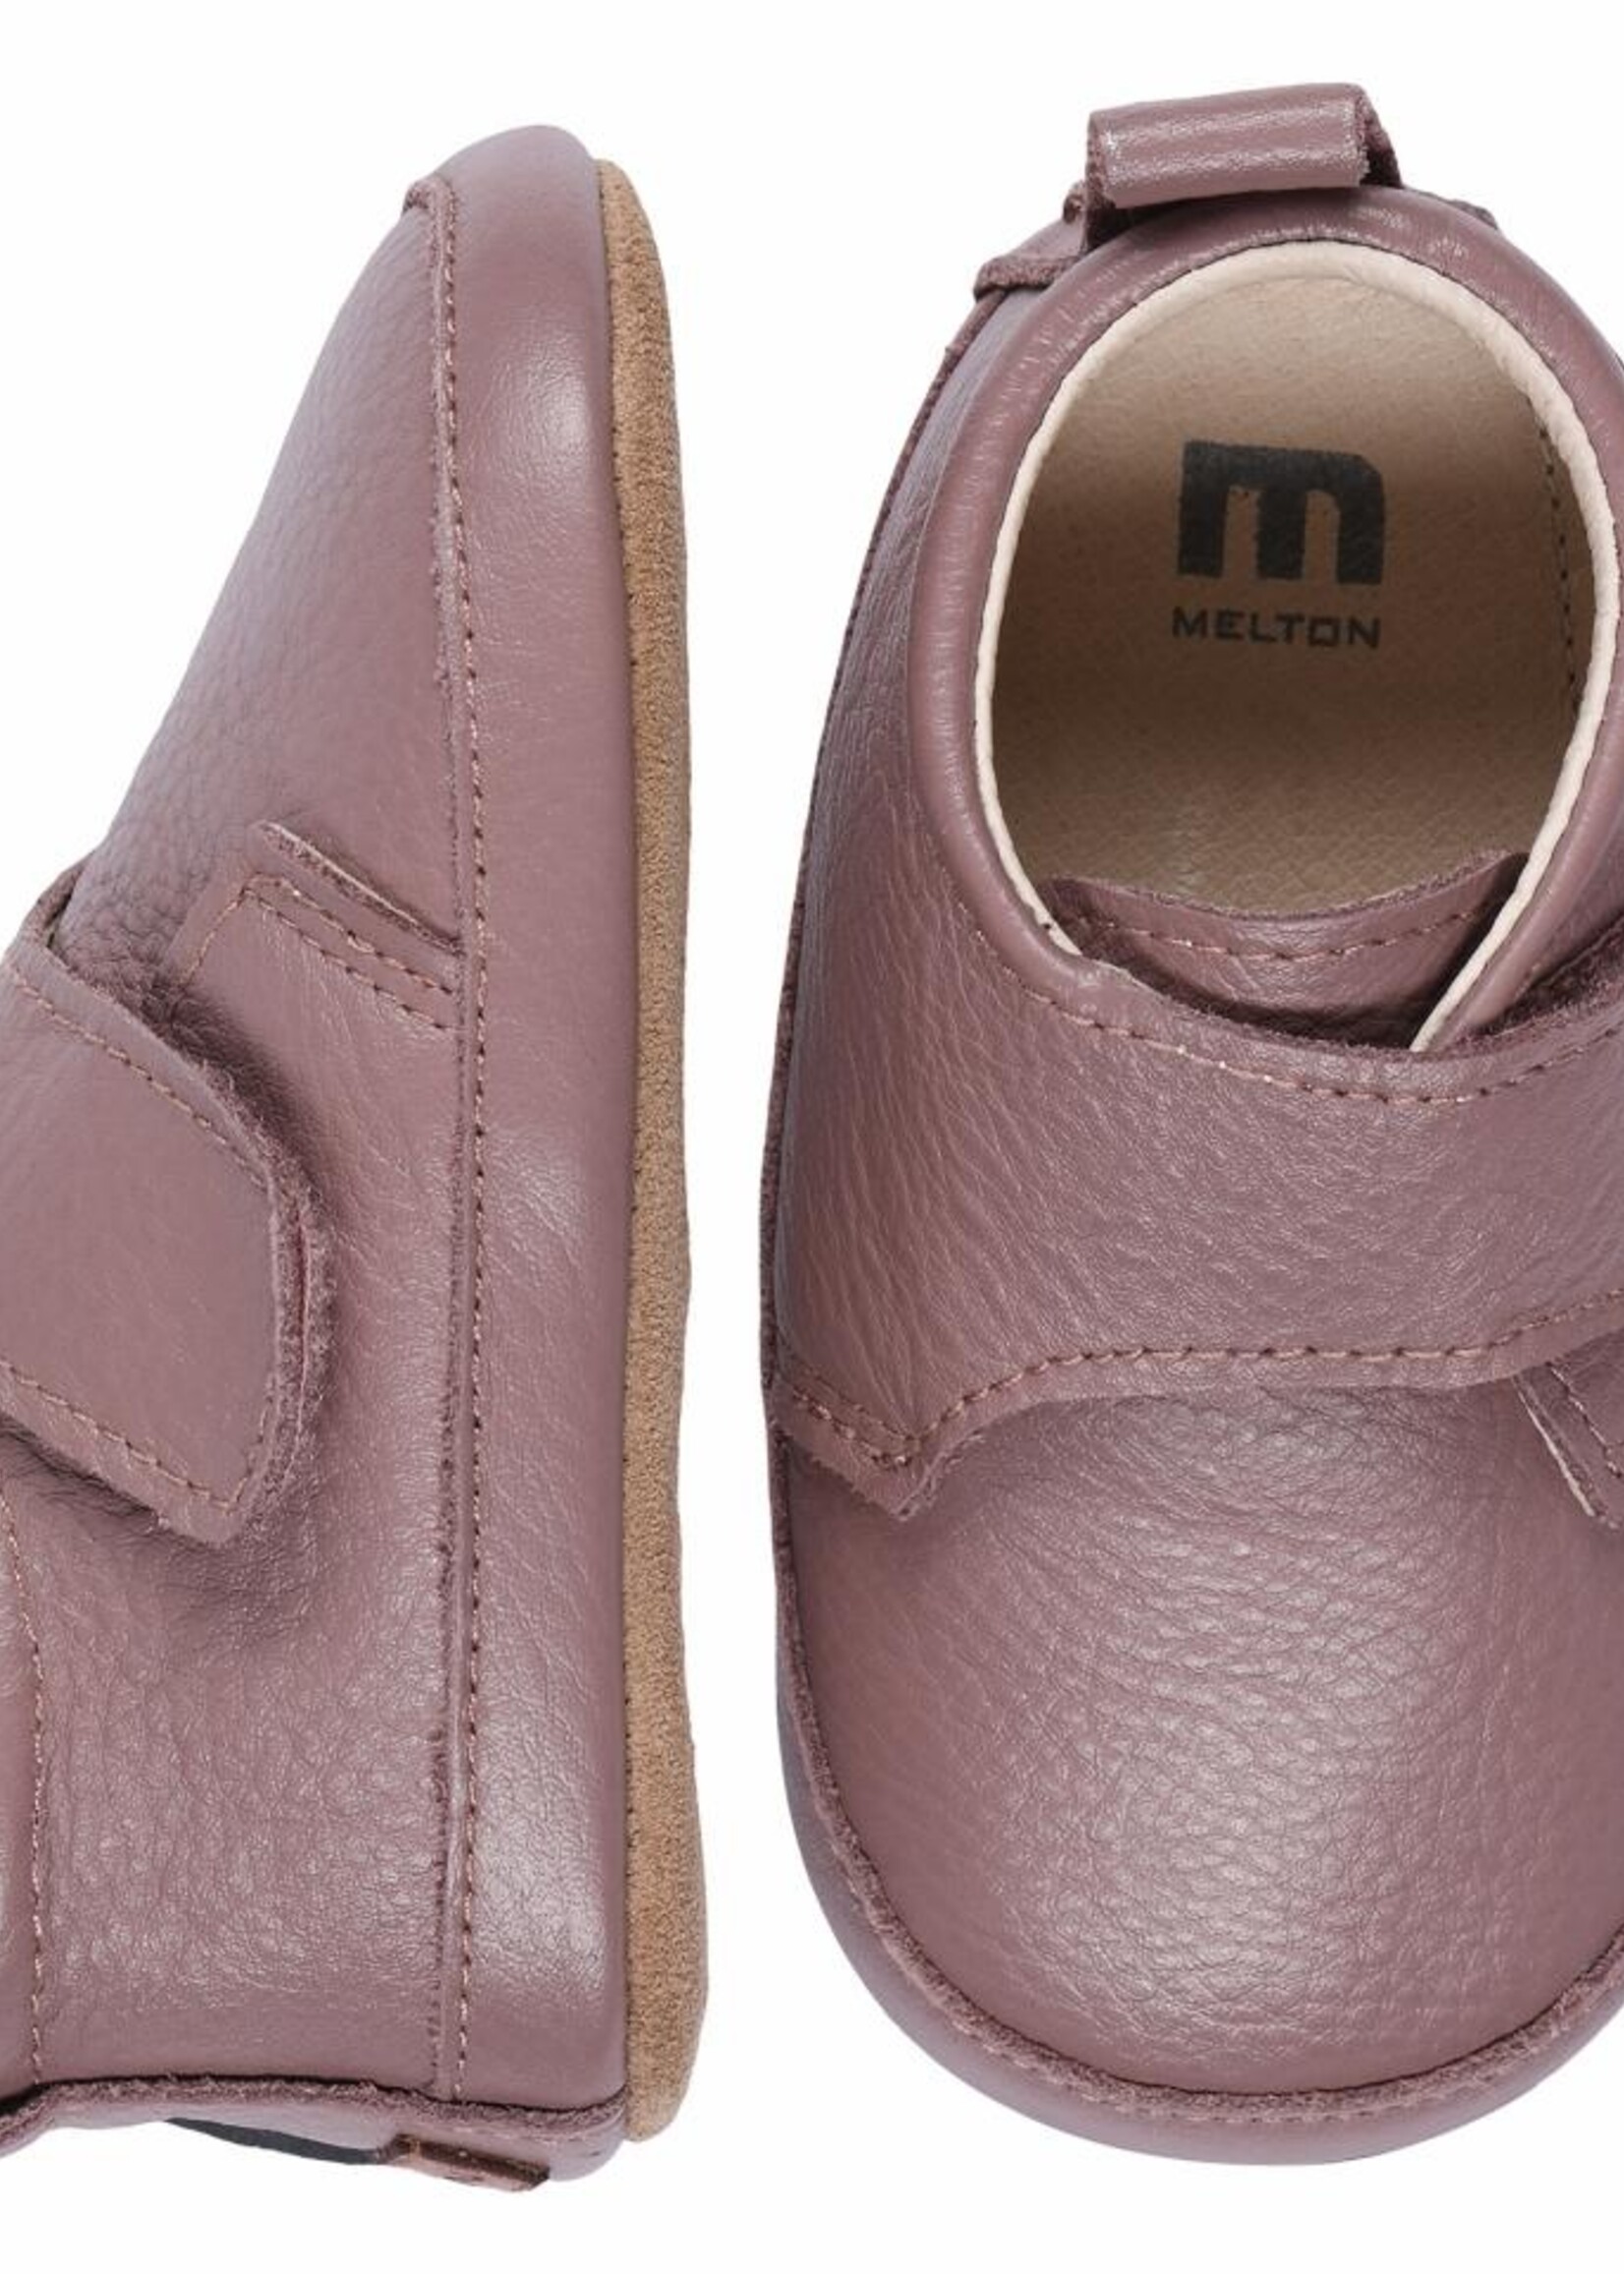 MP Denmark Melton | Luxury leather slippers - Fawn